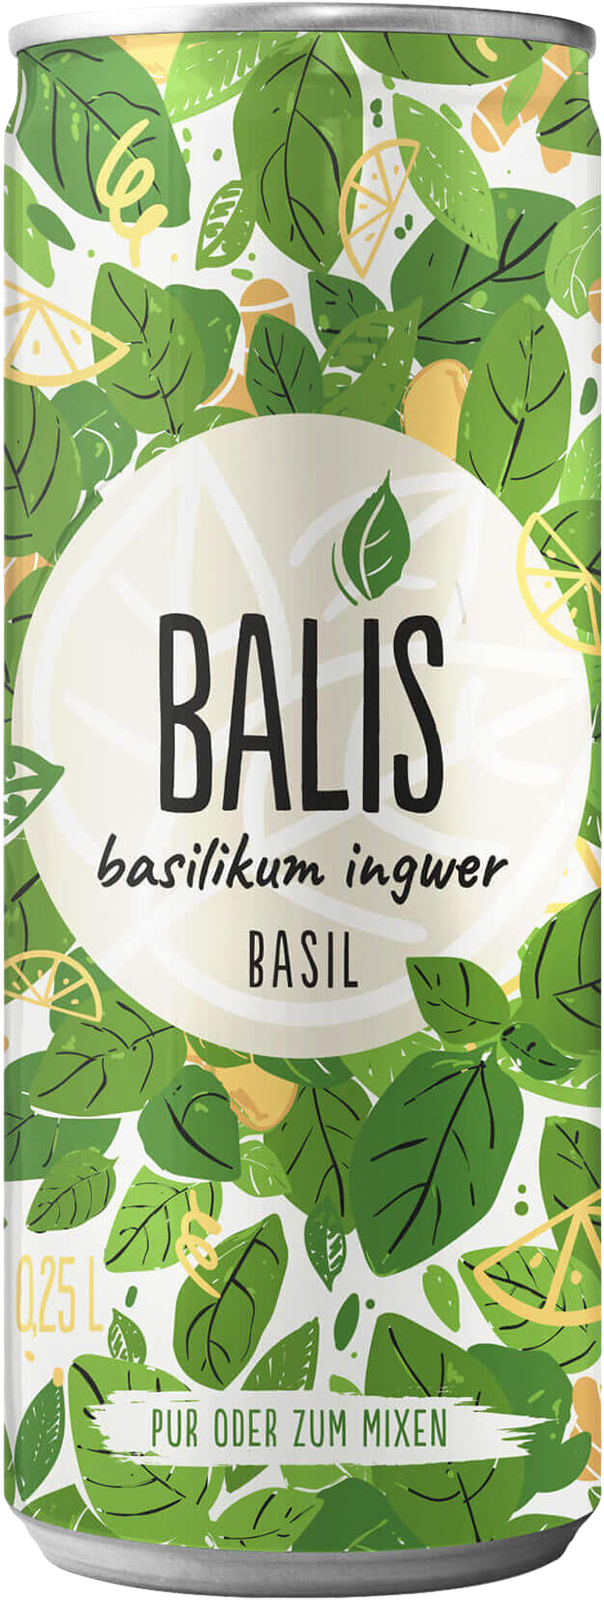 Balis Basil Basilikum Ingwer (1 x 0.25 l)